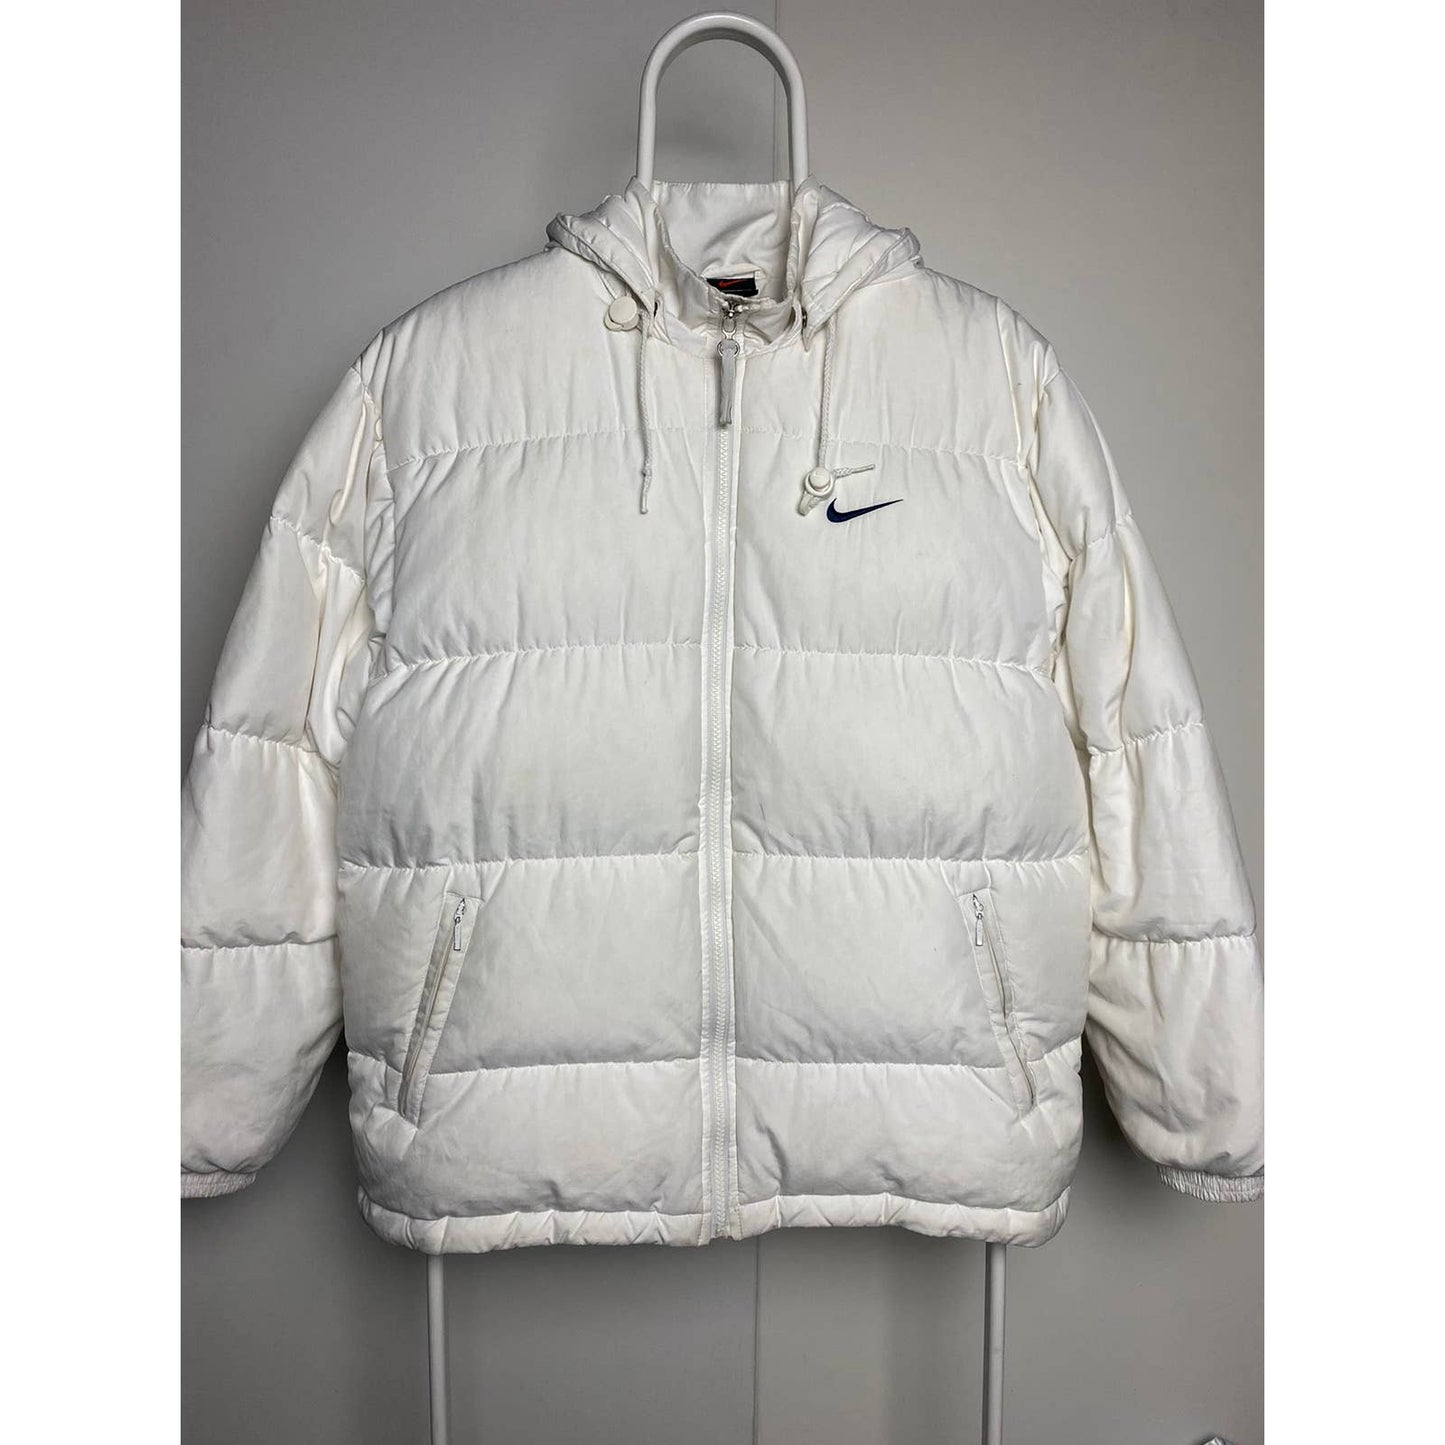 St Lotsbestemming regeren Nike vintage puffer jacket big logo white neon yellow 90s – Refitted